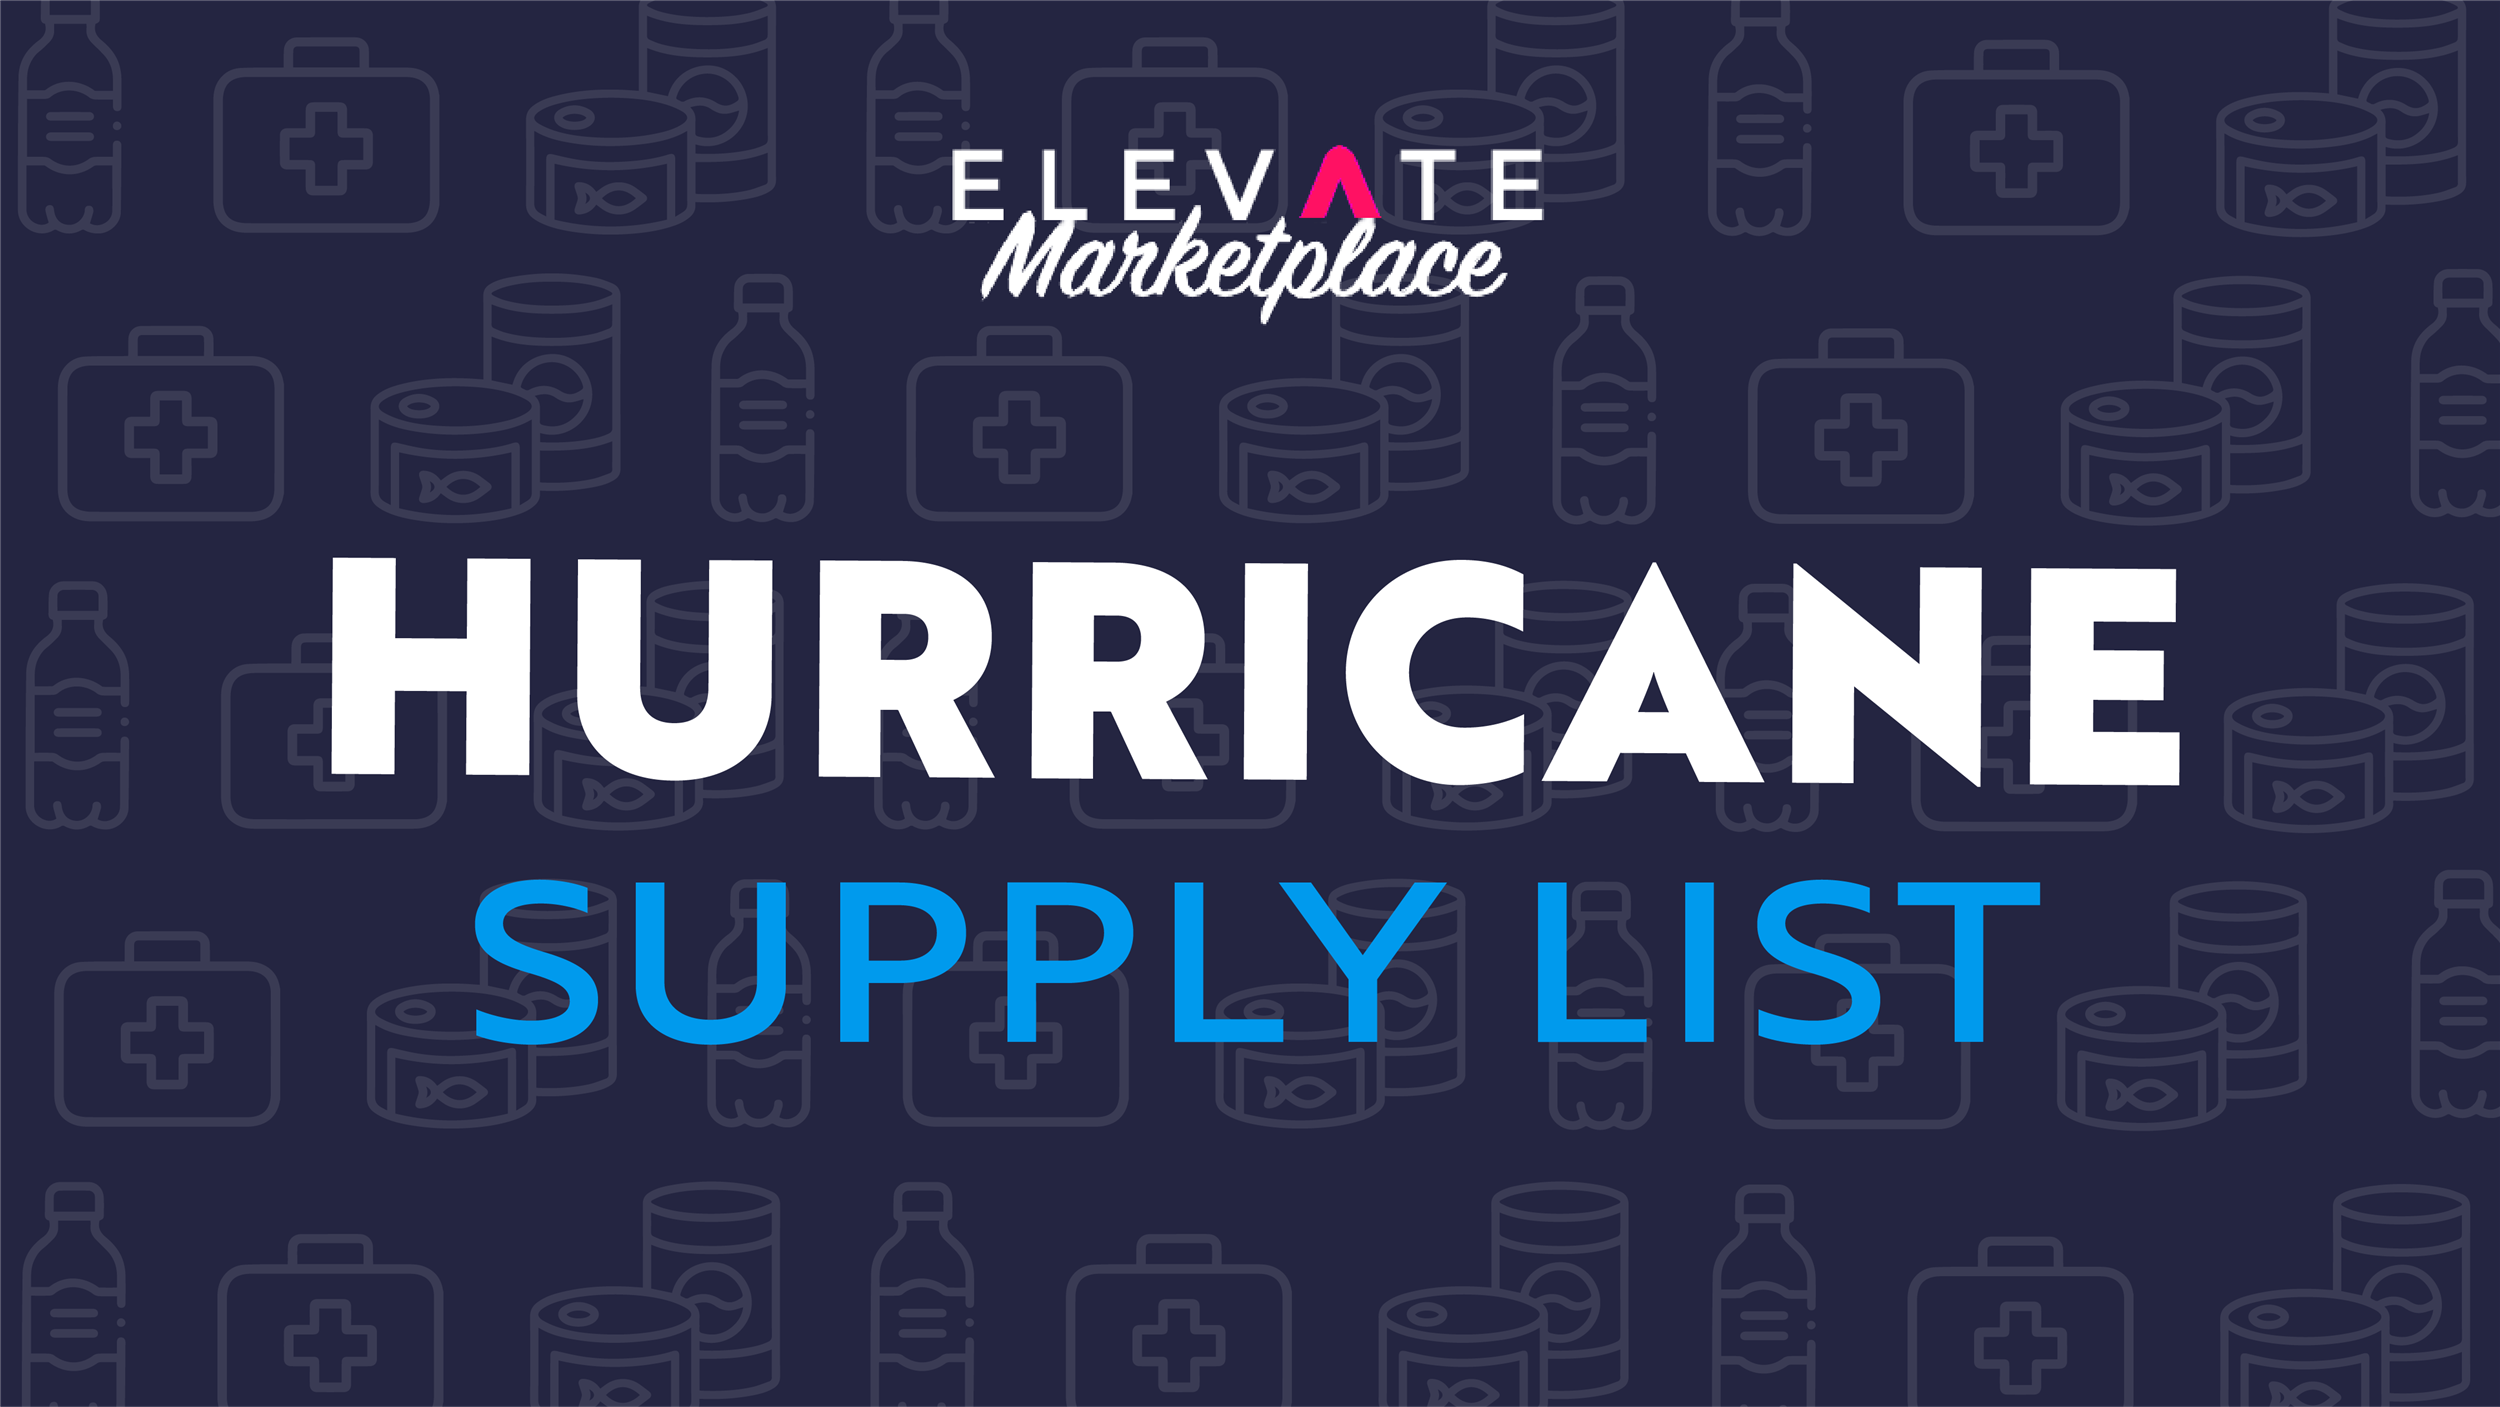 Hurricane Supply List ELEVATE Marketplace